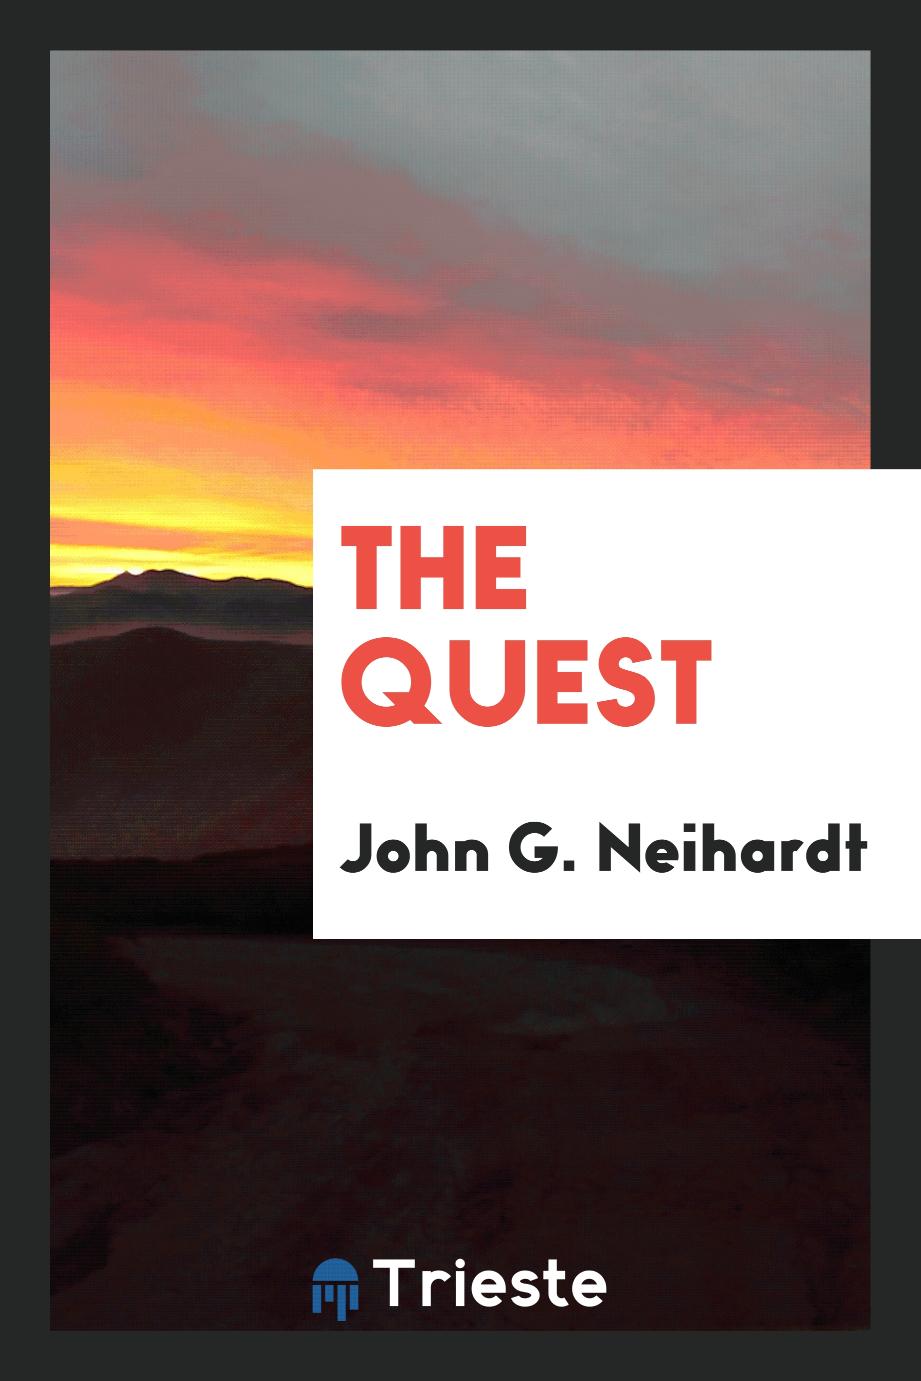 John G. Neihardt - The quest